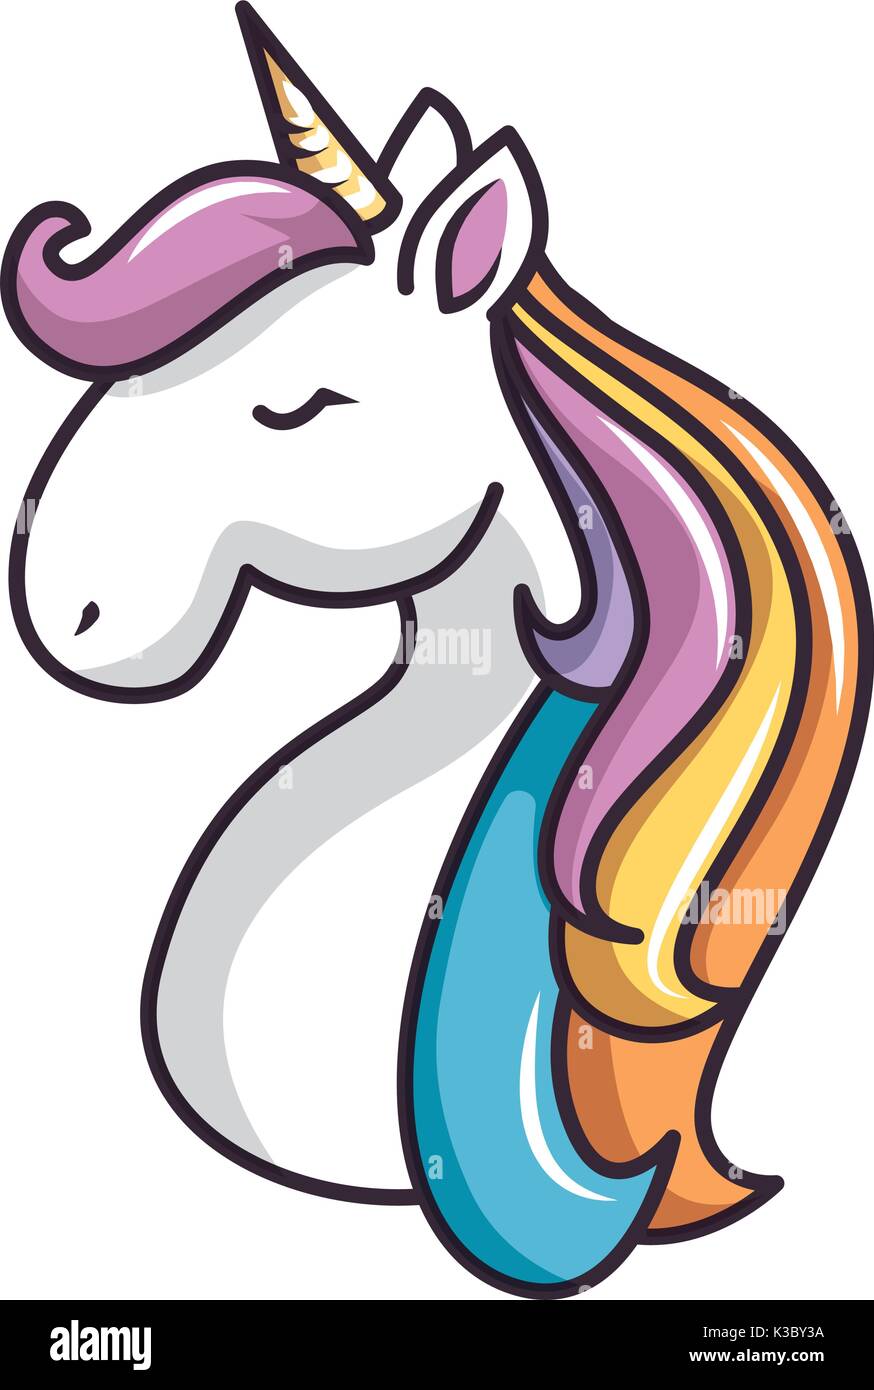 Cute unicorn character icon Stock Vector Image & Art - Alamy